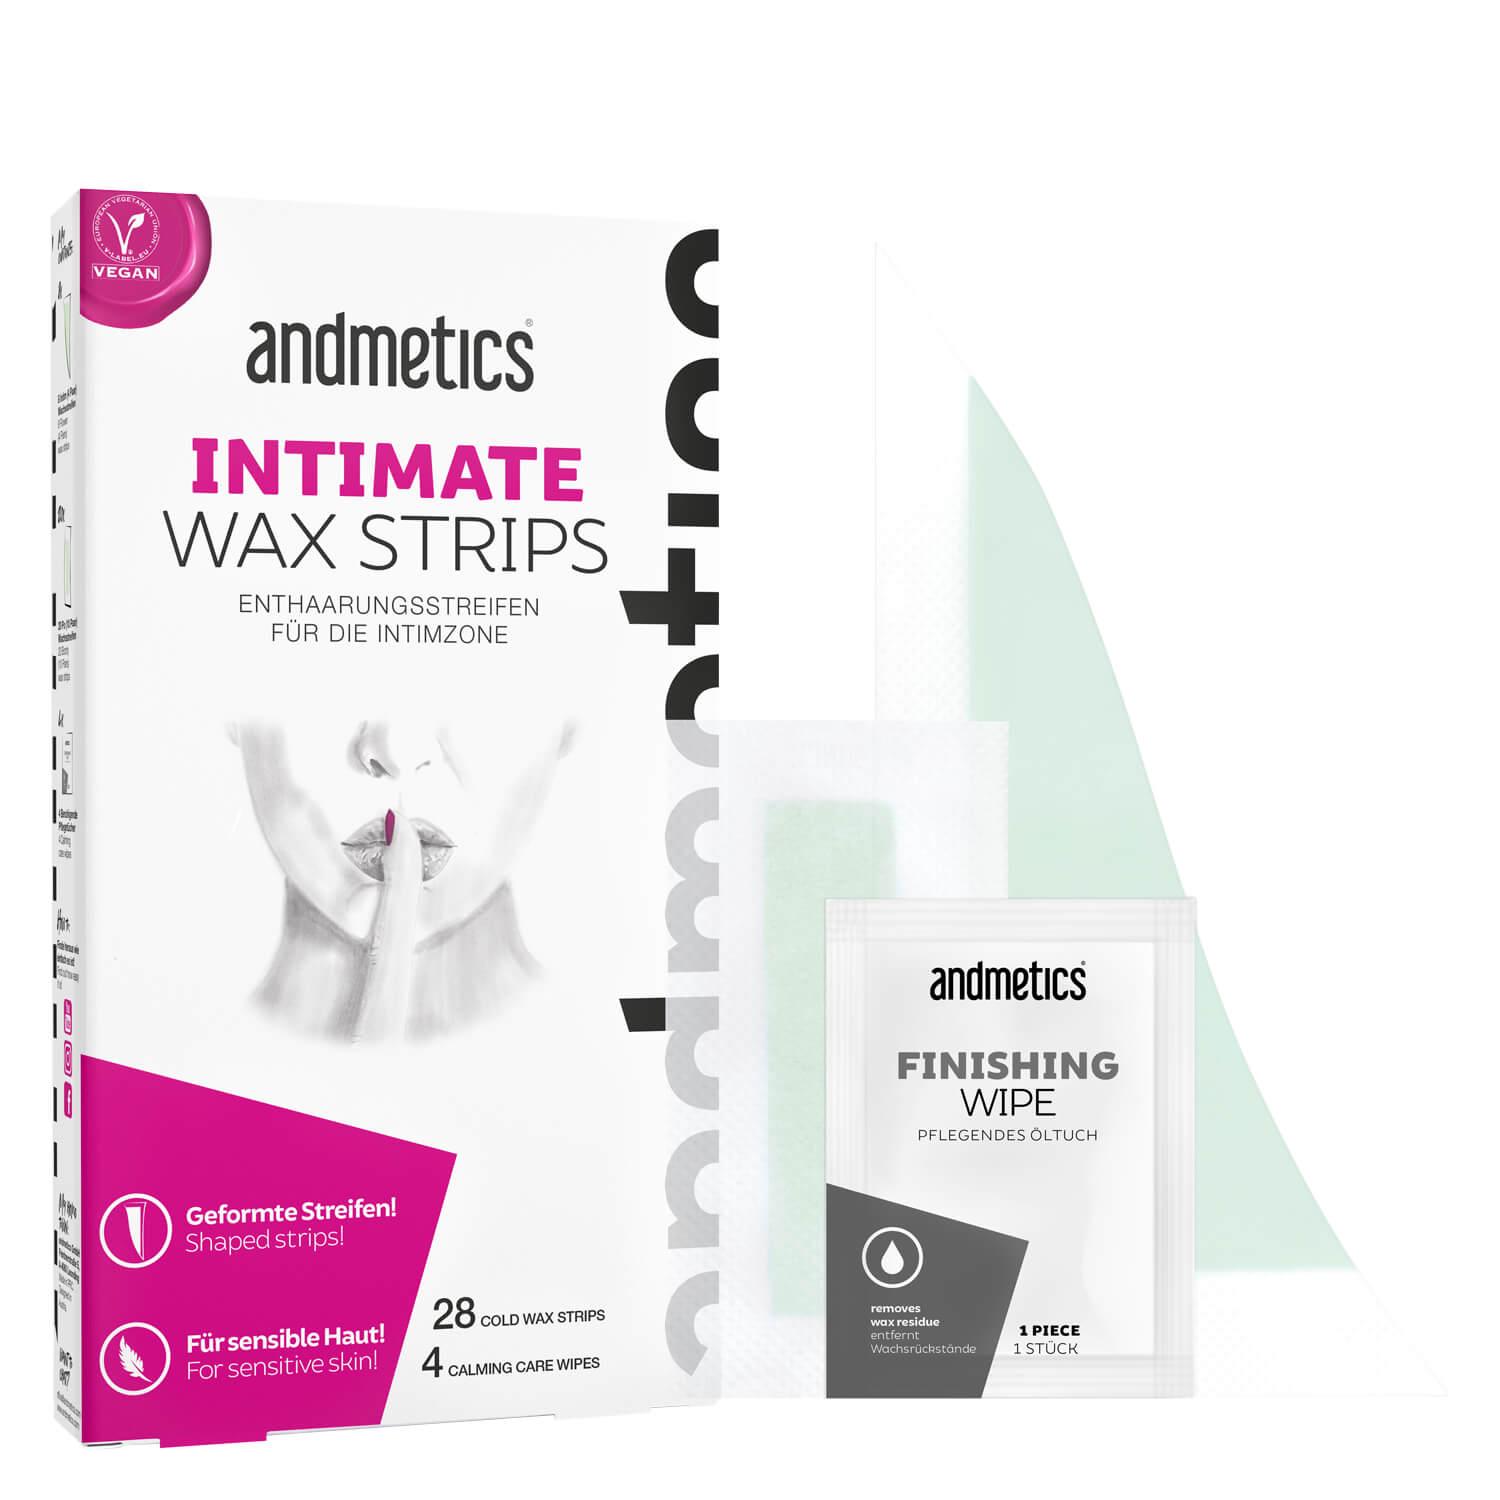 andmetics - Intimate Wax Strips